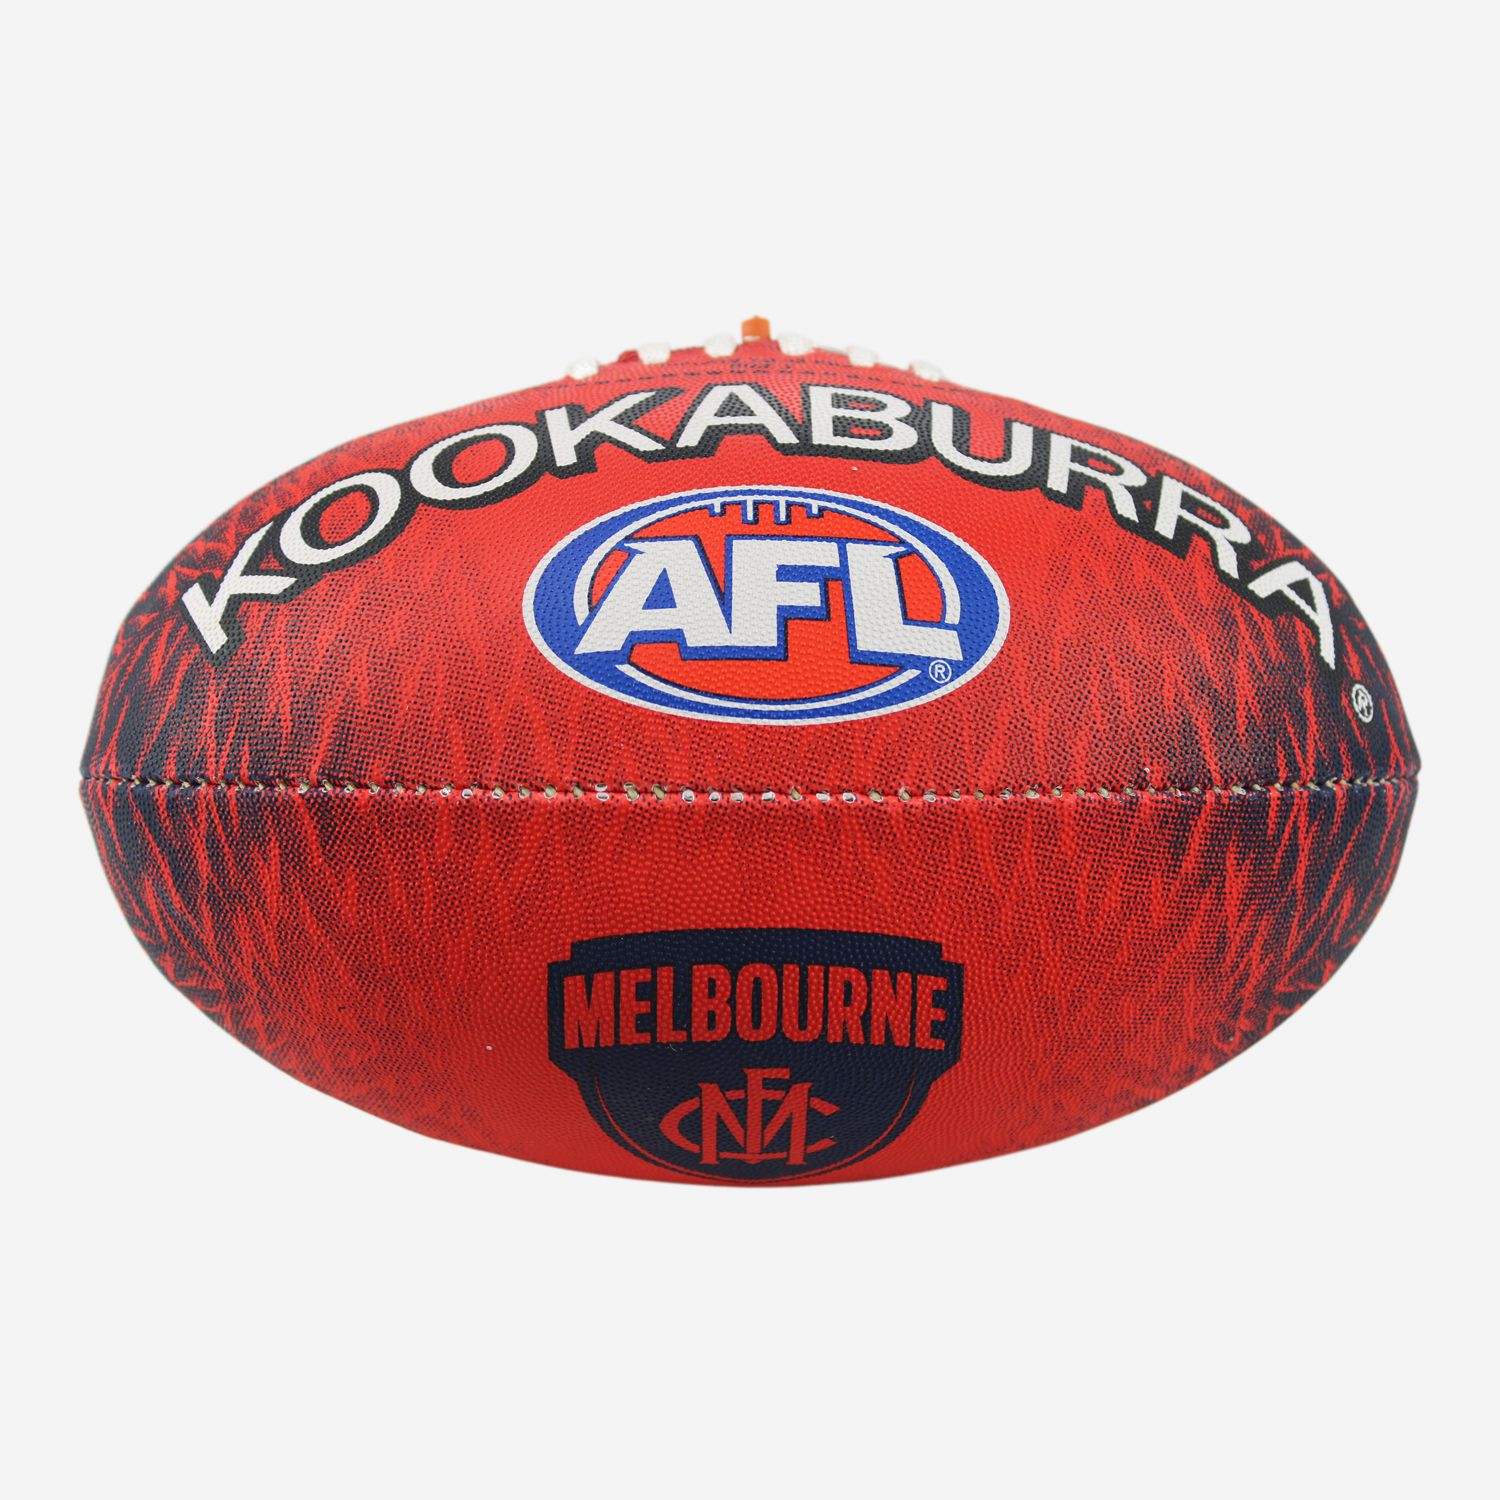 Kookaburra AFL Aura Football Size 3 Melbourne Demons